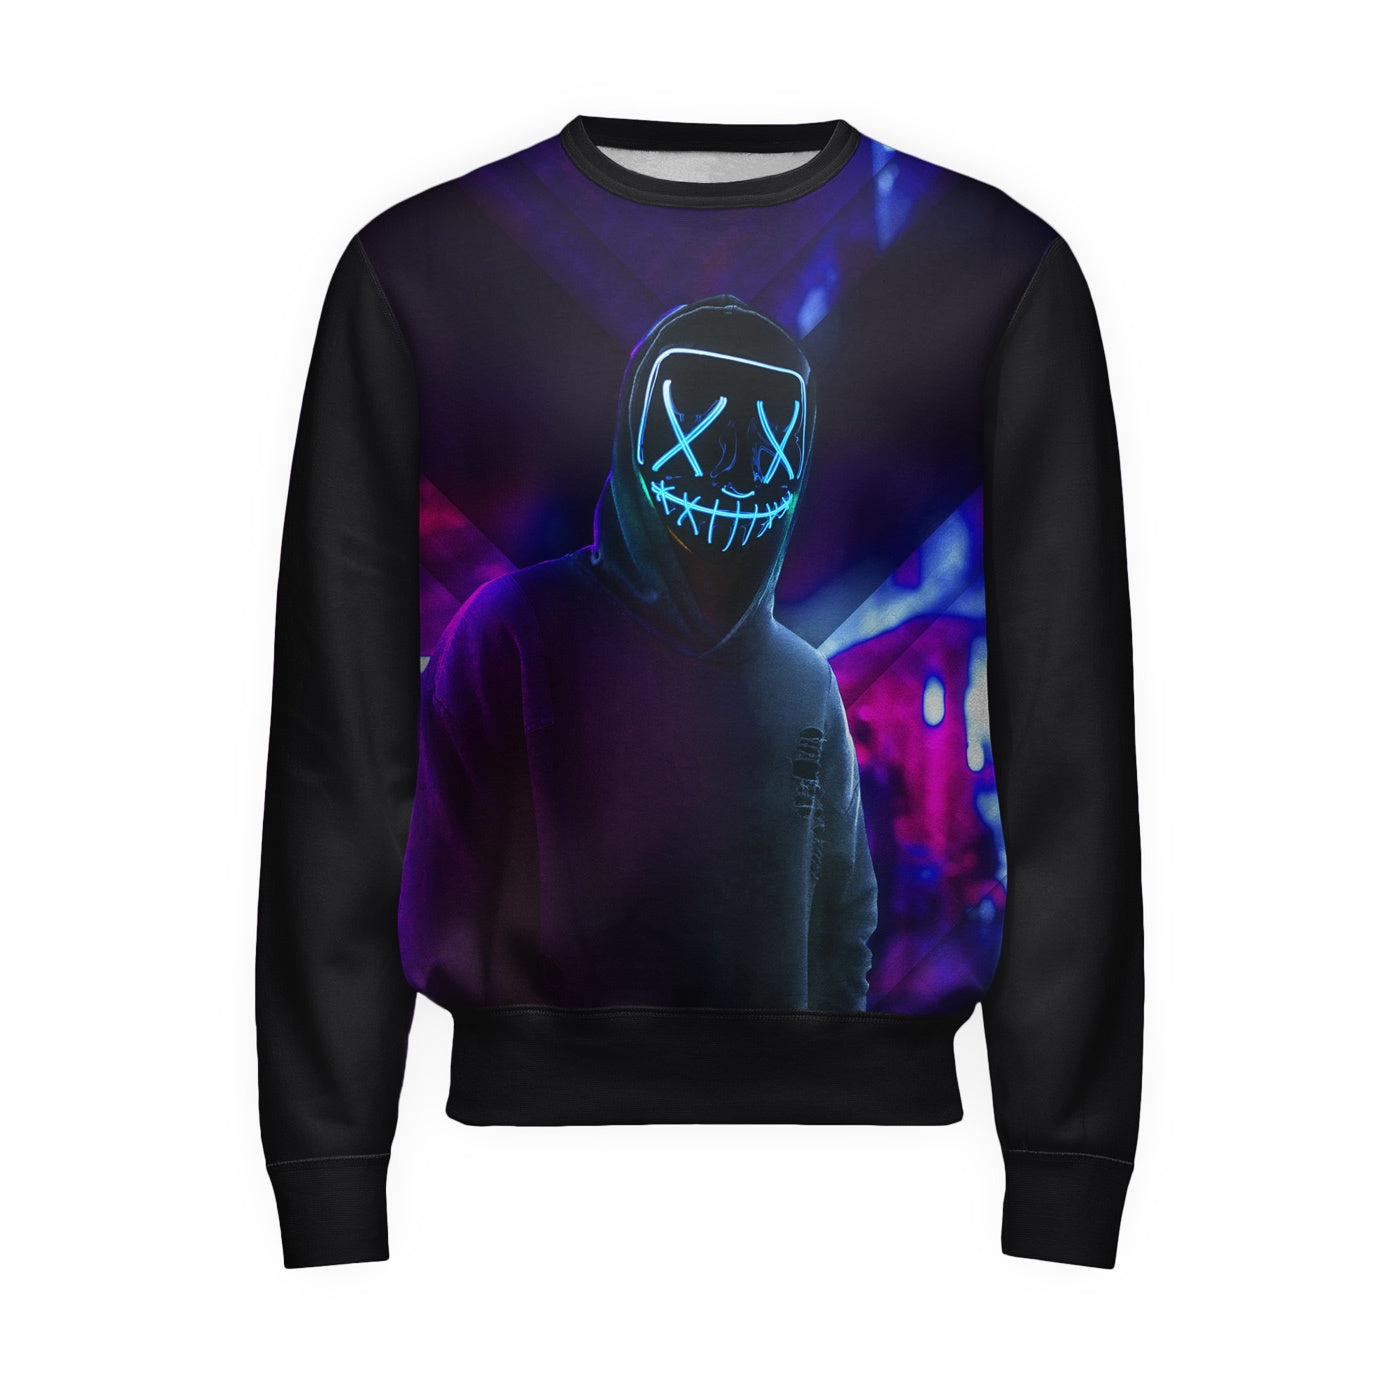 Neon Face Sweatshirt